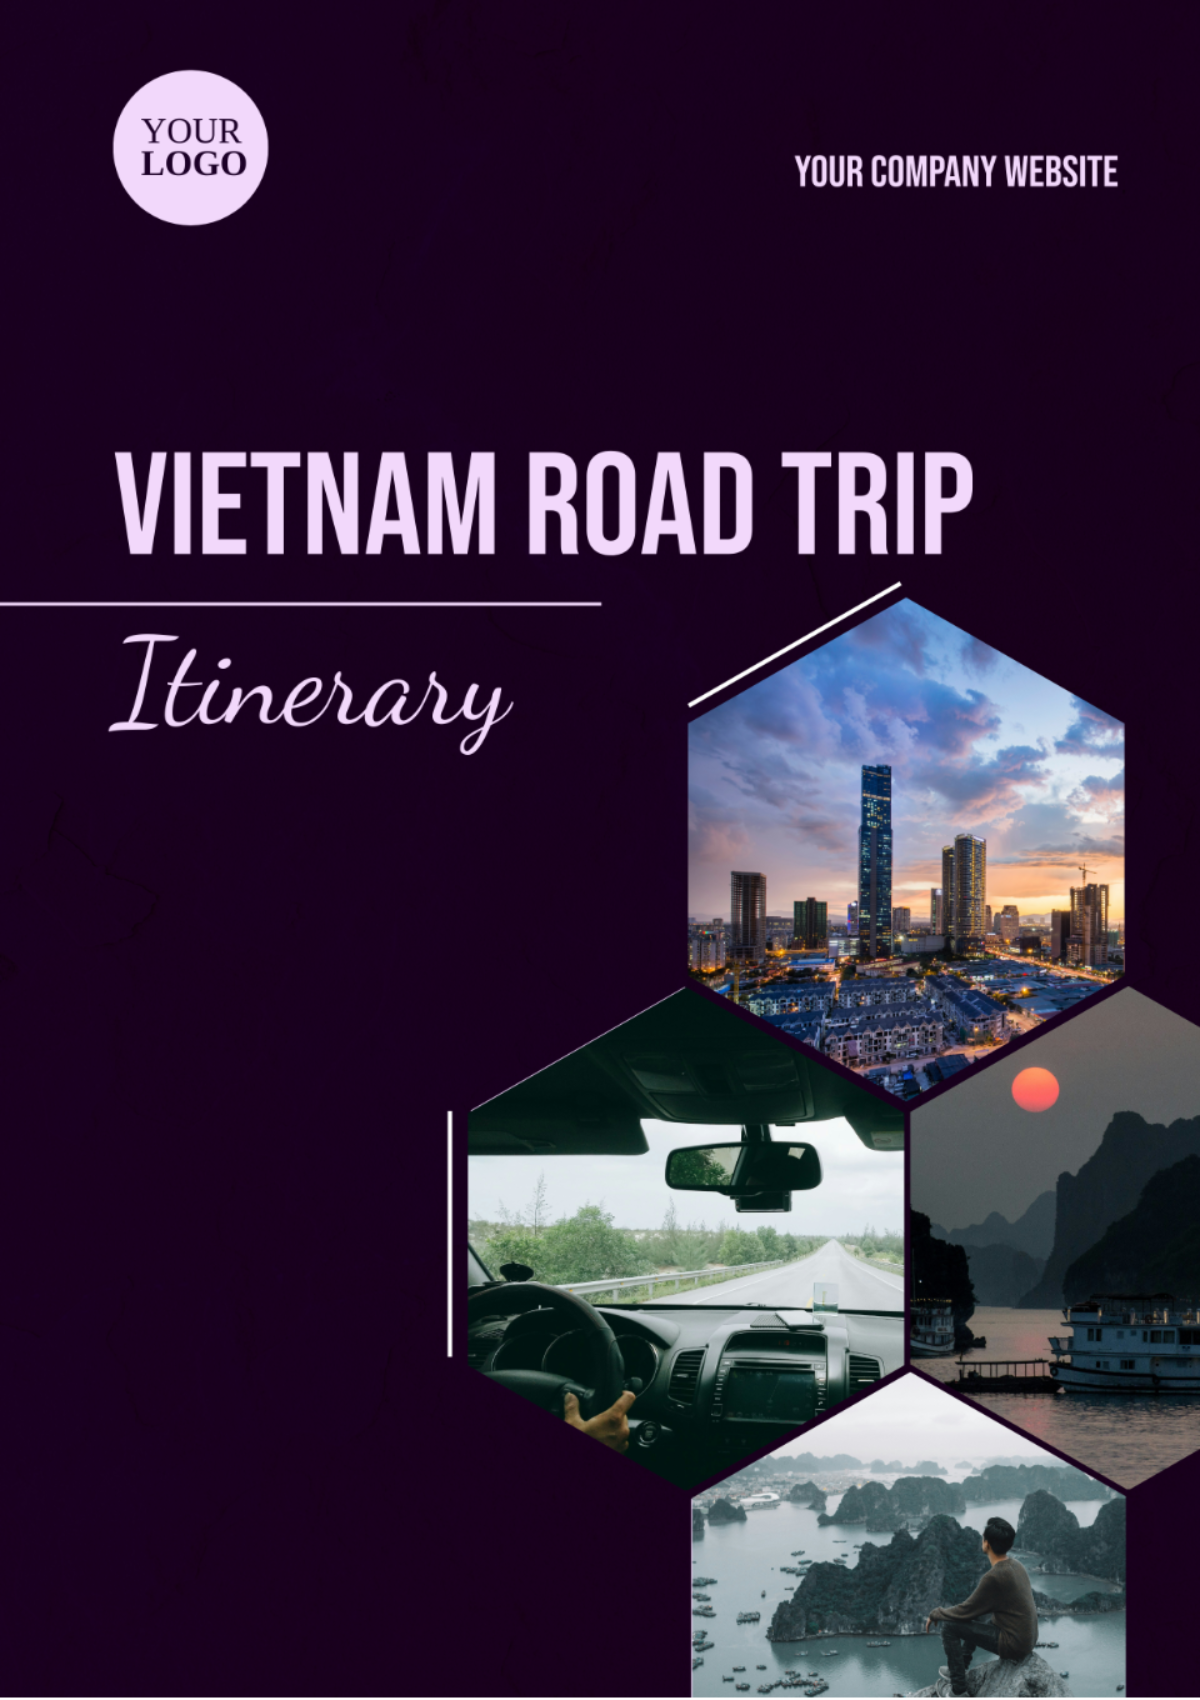 Vietnam Road Trip Itinerary Template